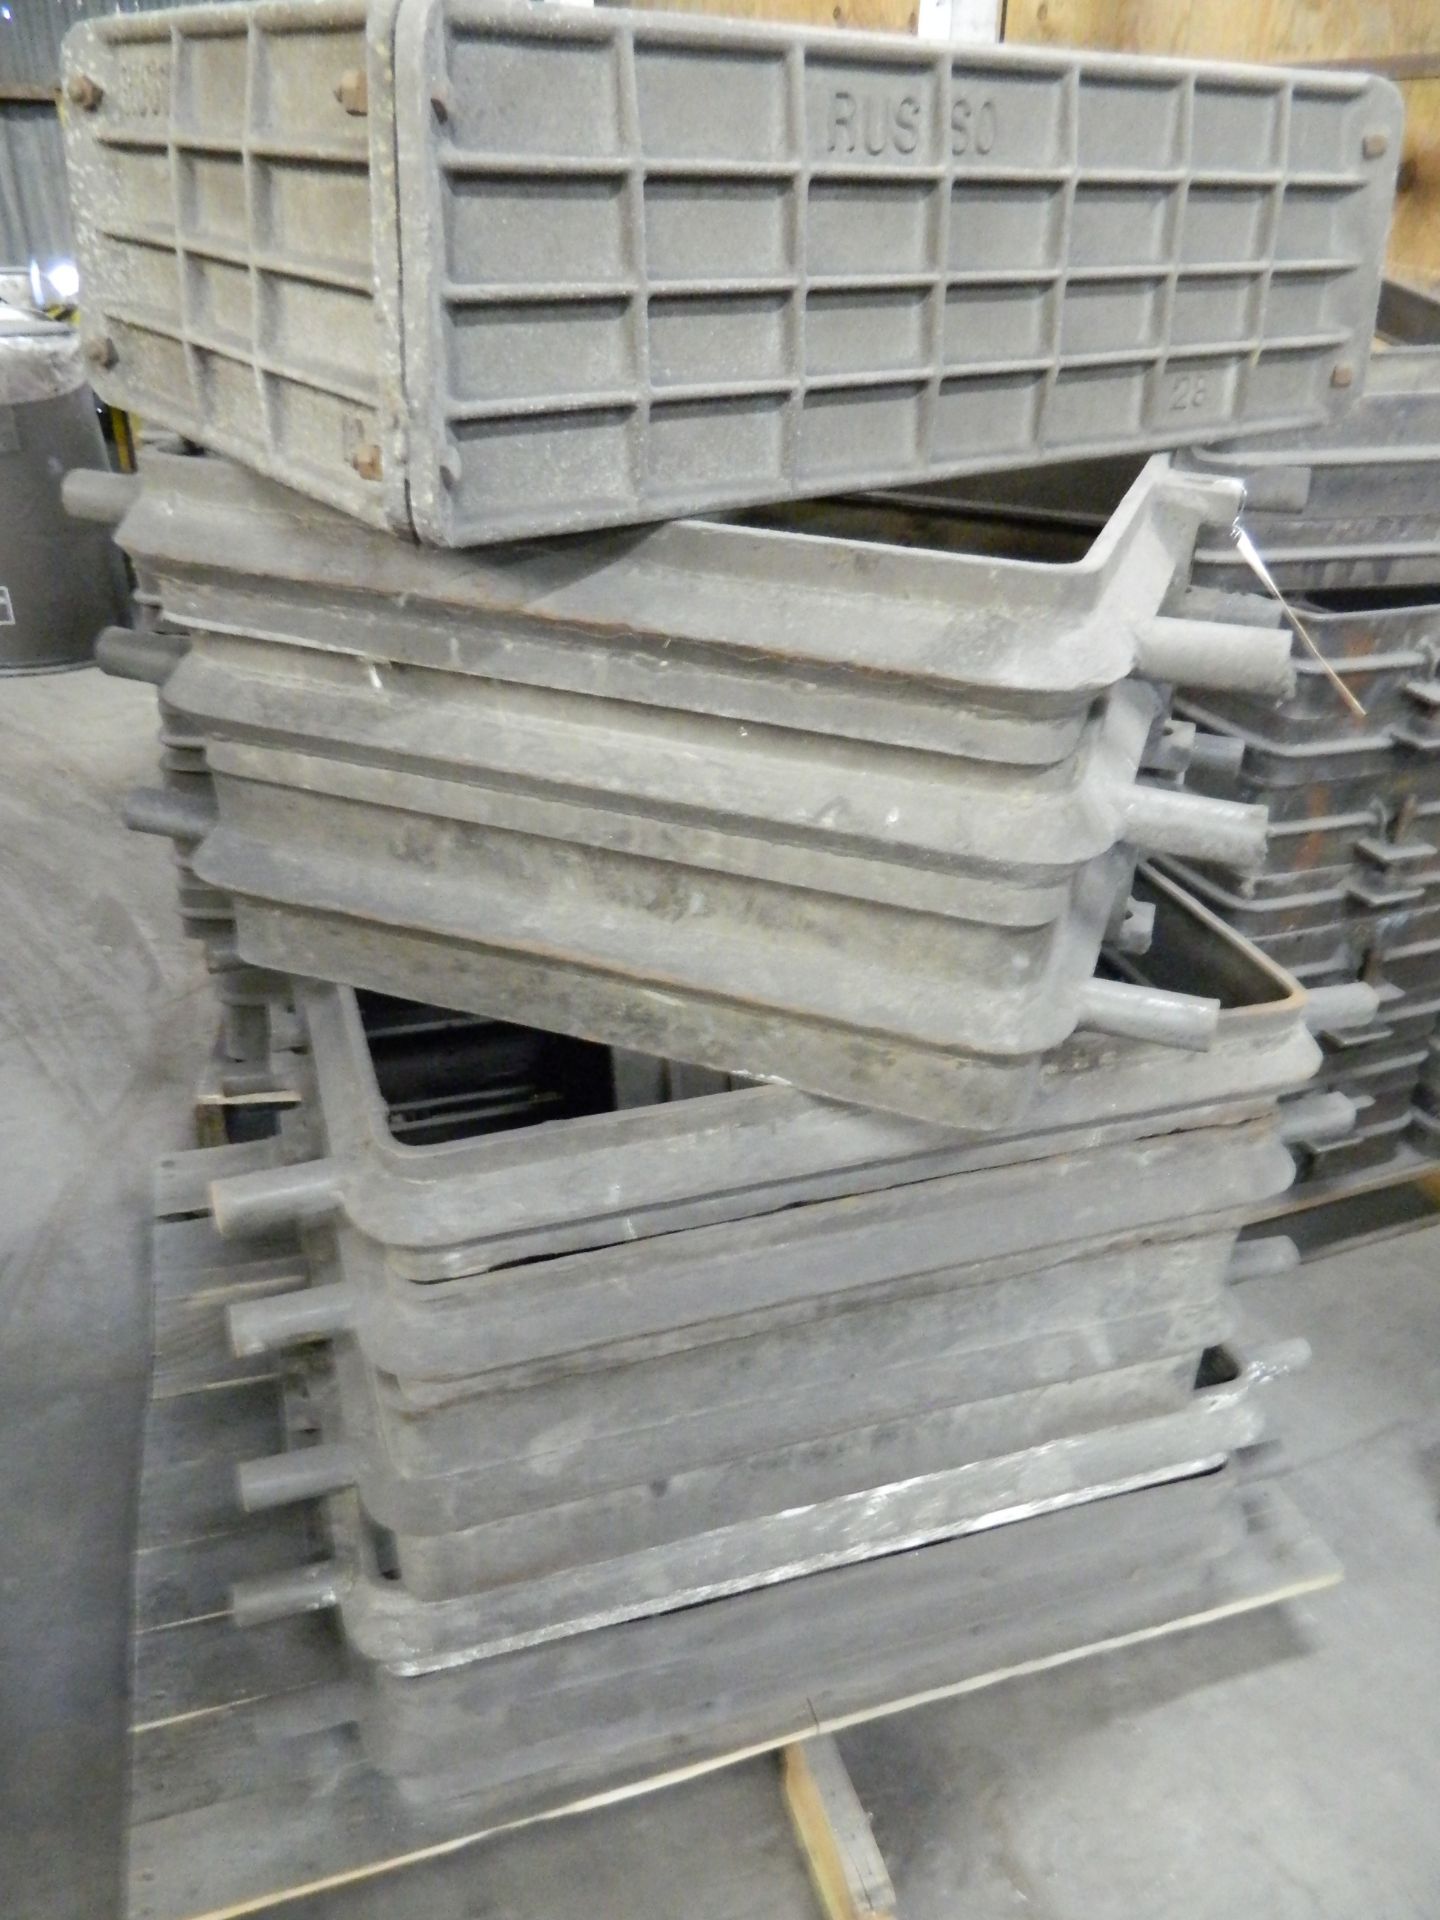 Steel molding boxes for floor, 16 x 28 (10 plus)